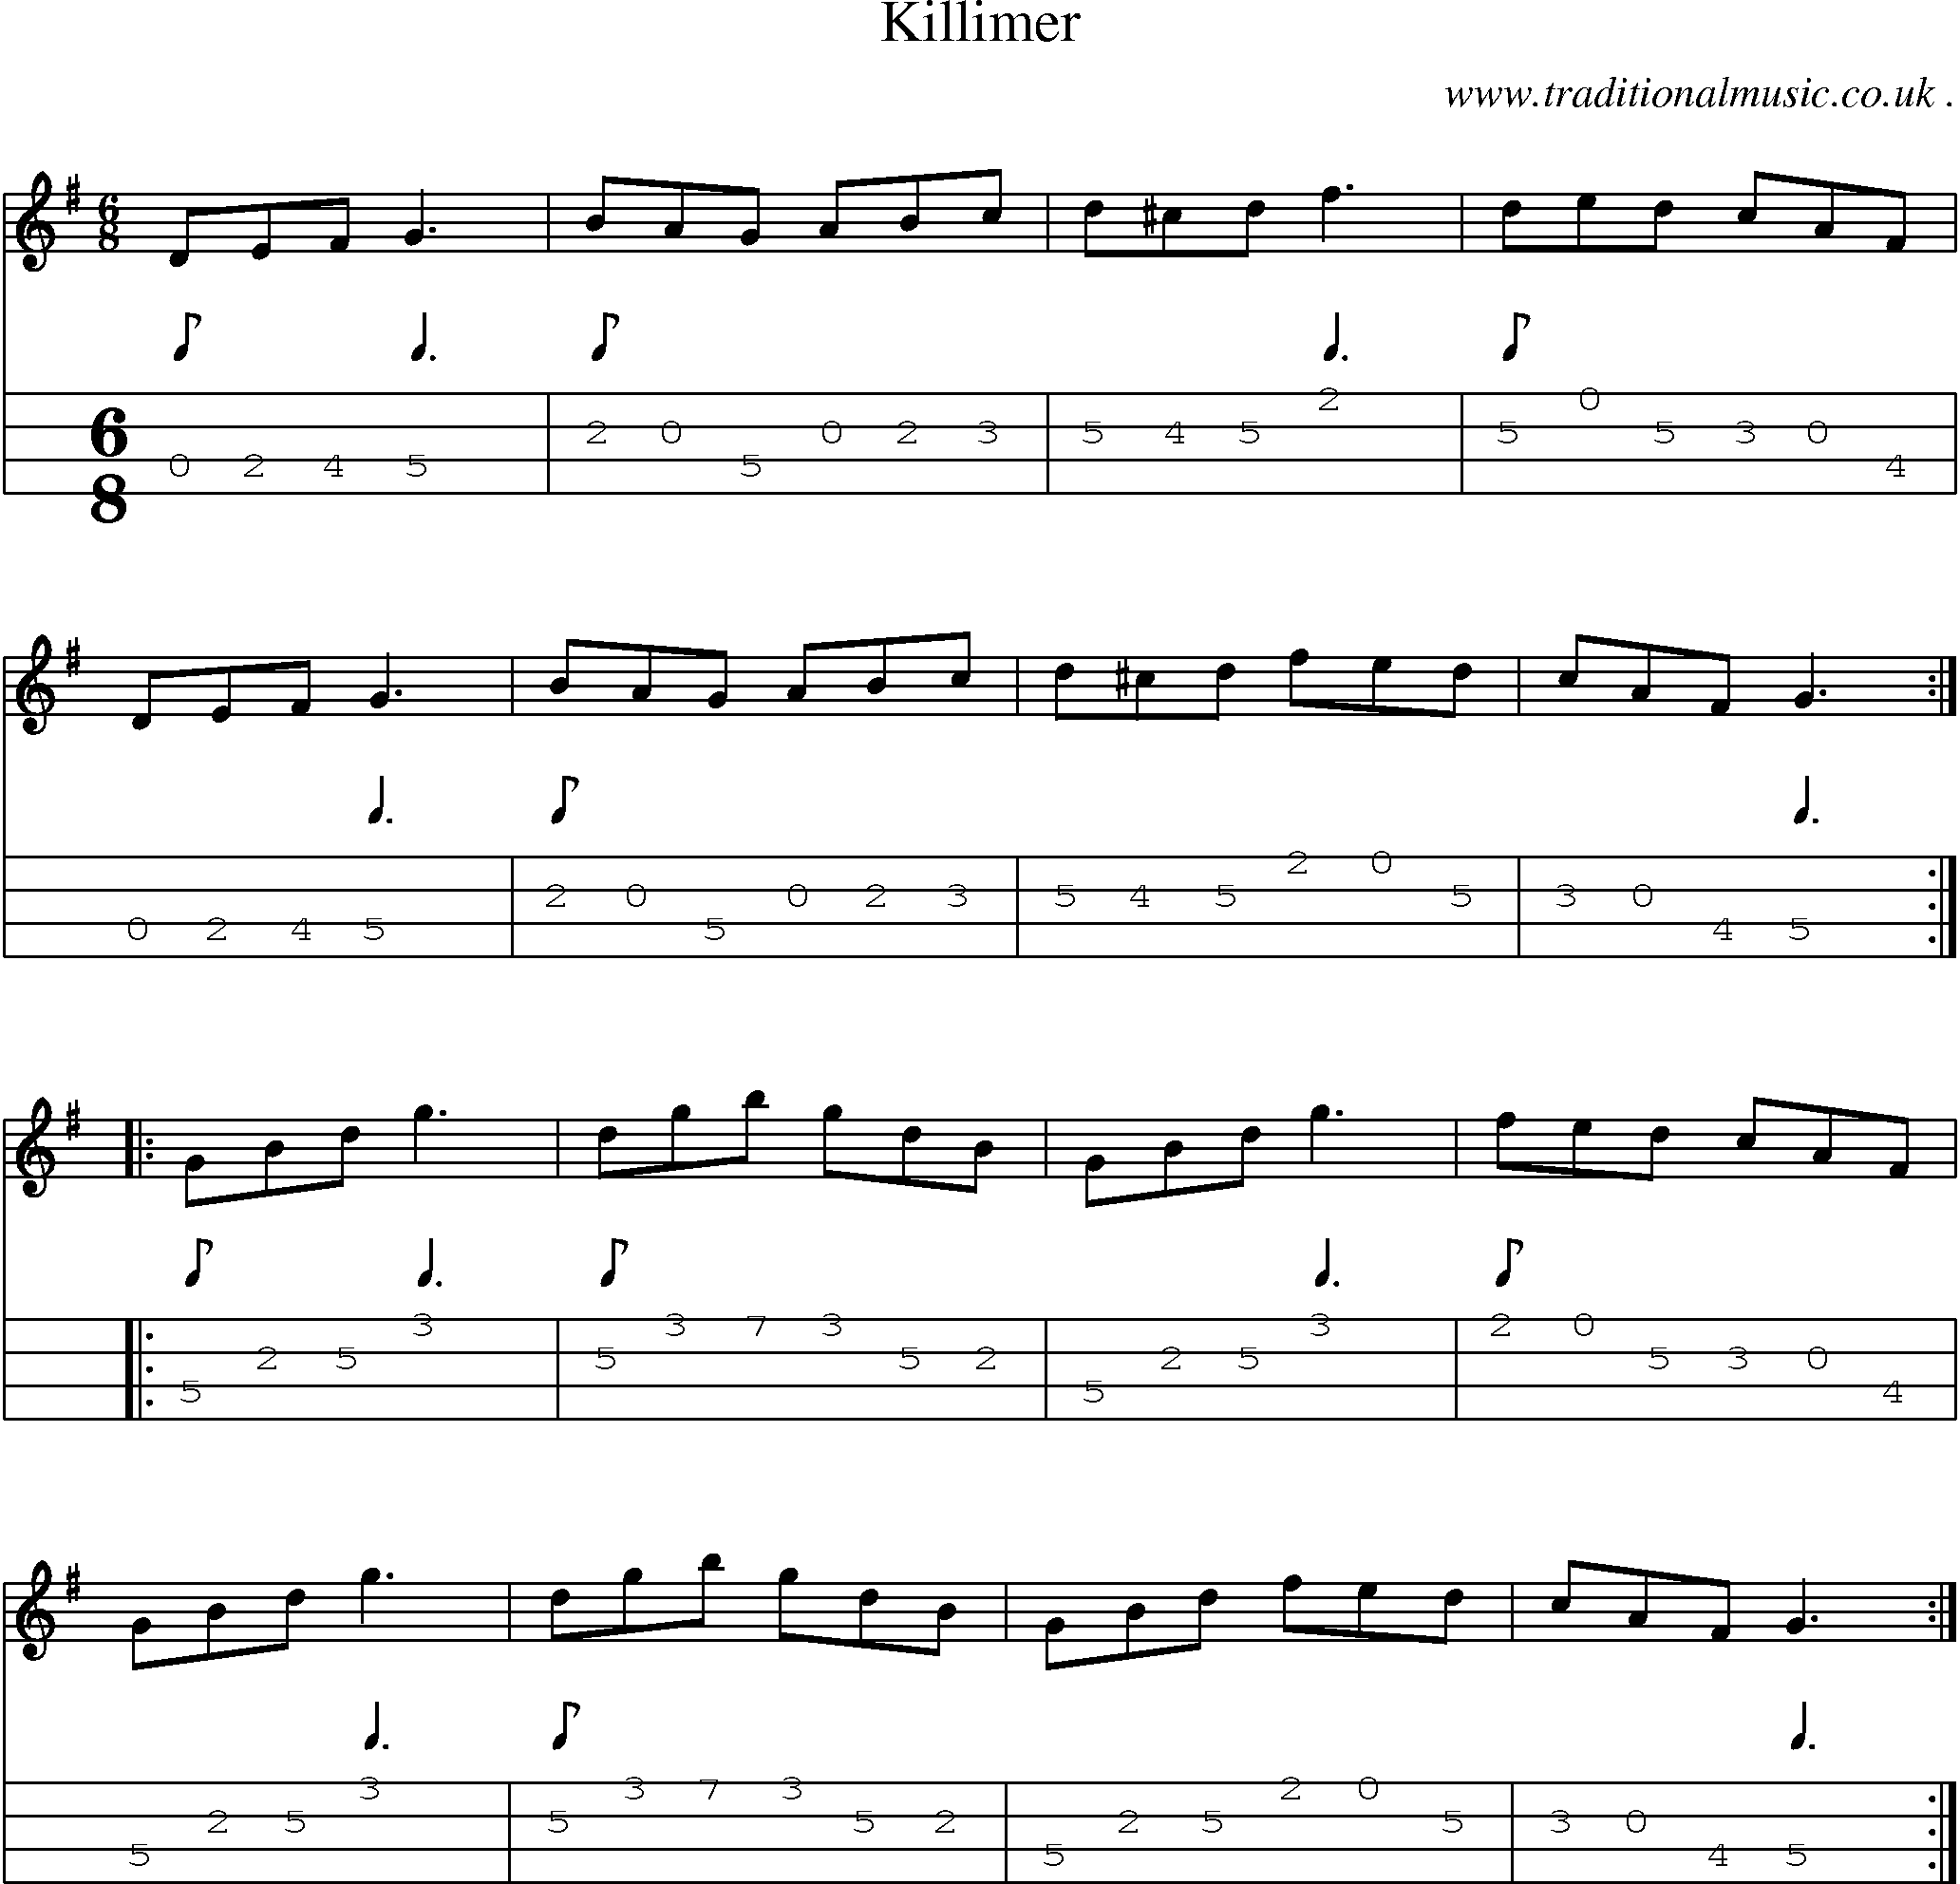 Sheet-Music and Mandolin Tabs for Killimer